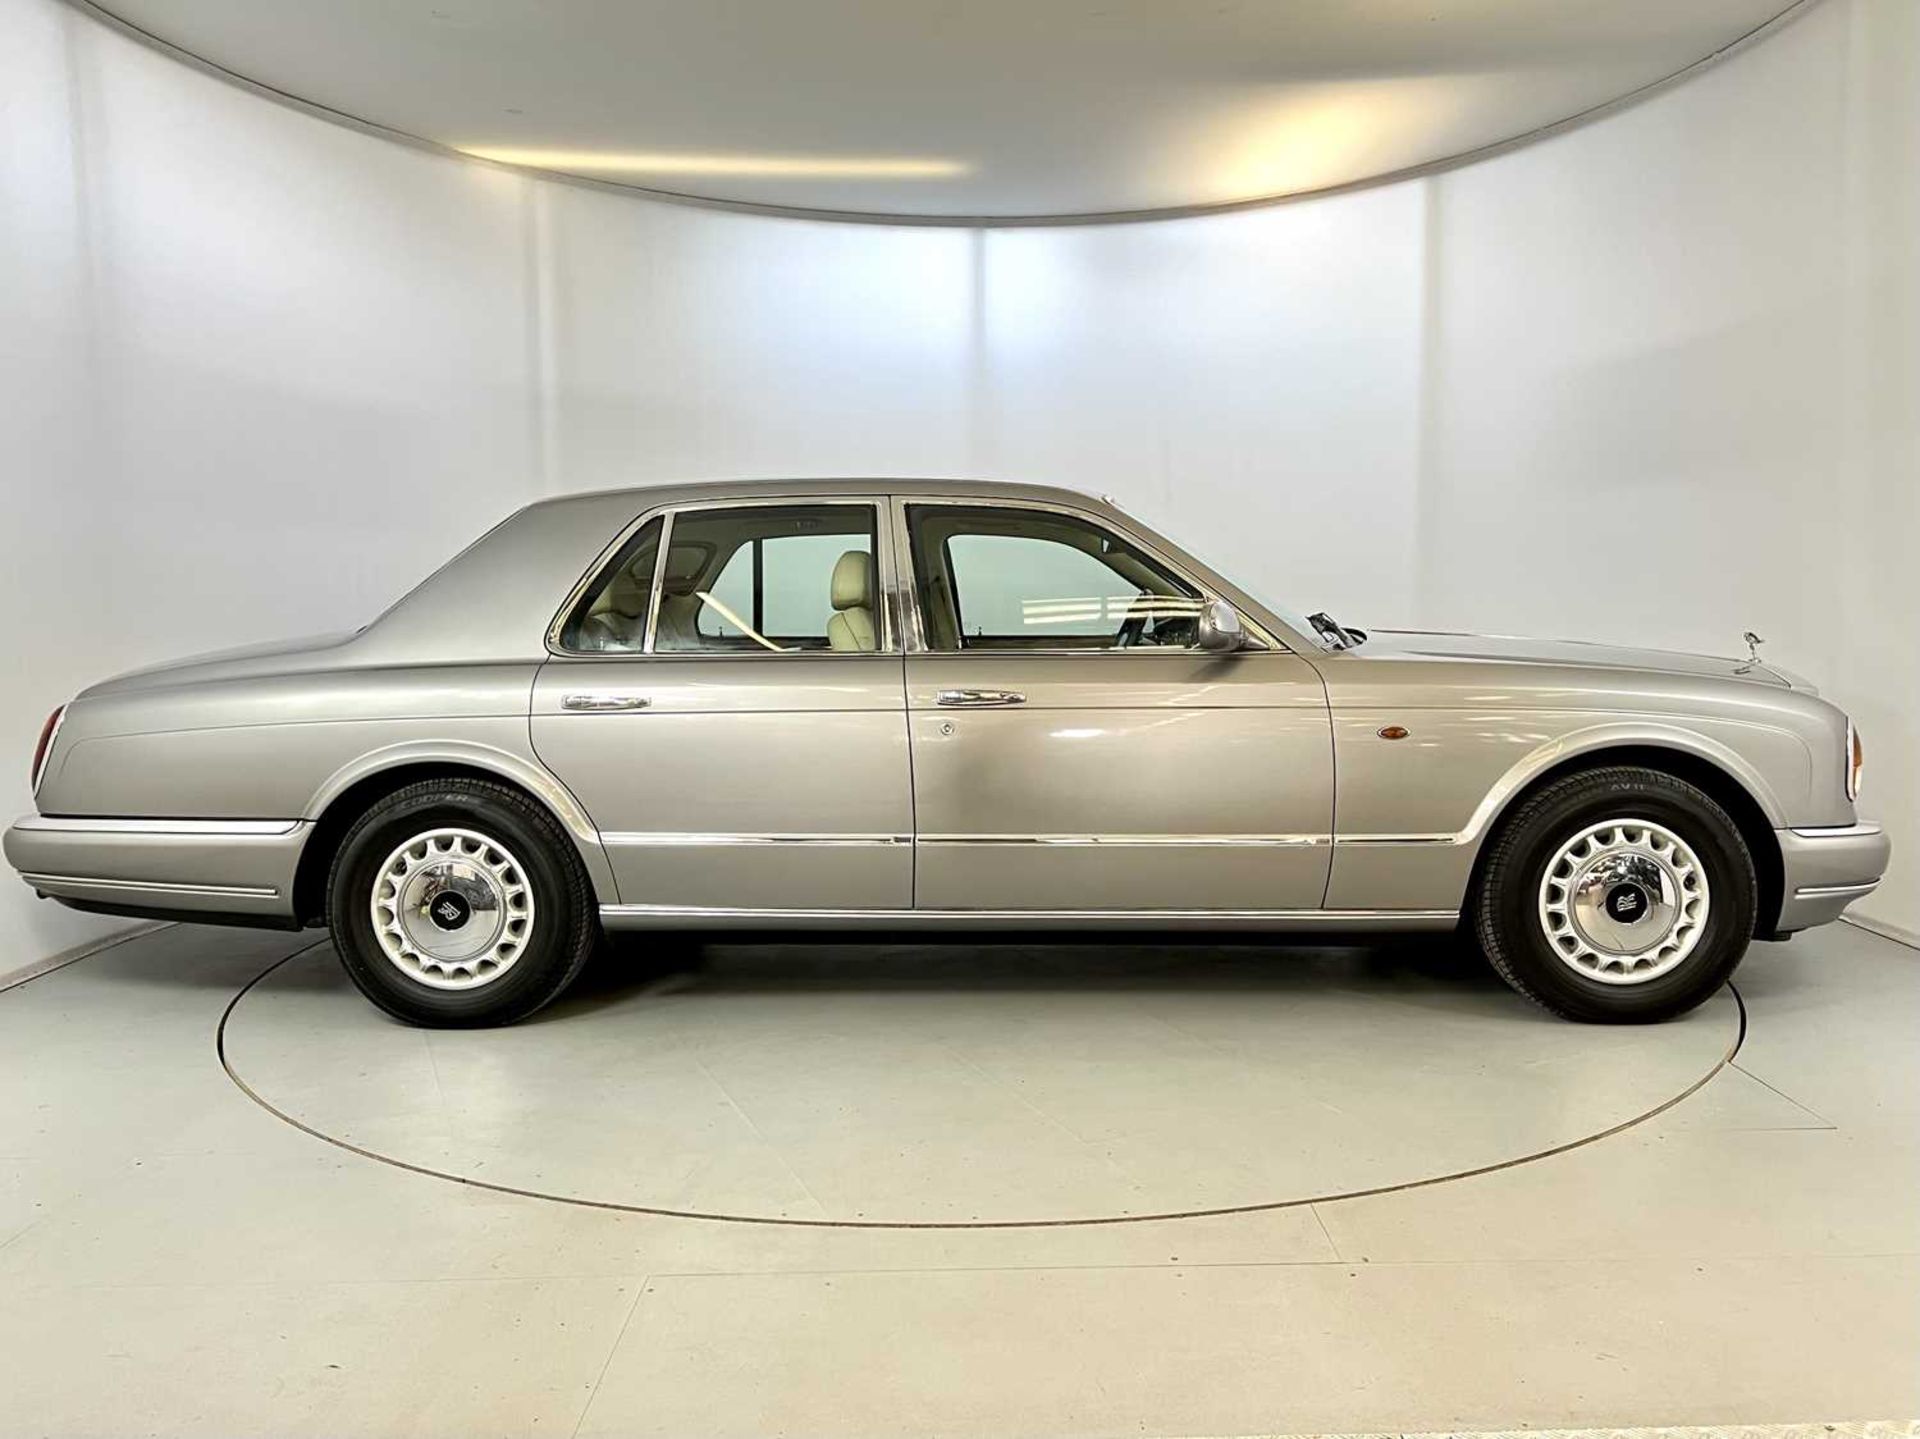 1999 Rolls Royce Silver Seraph - Image 11 of 38